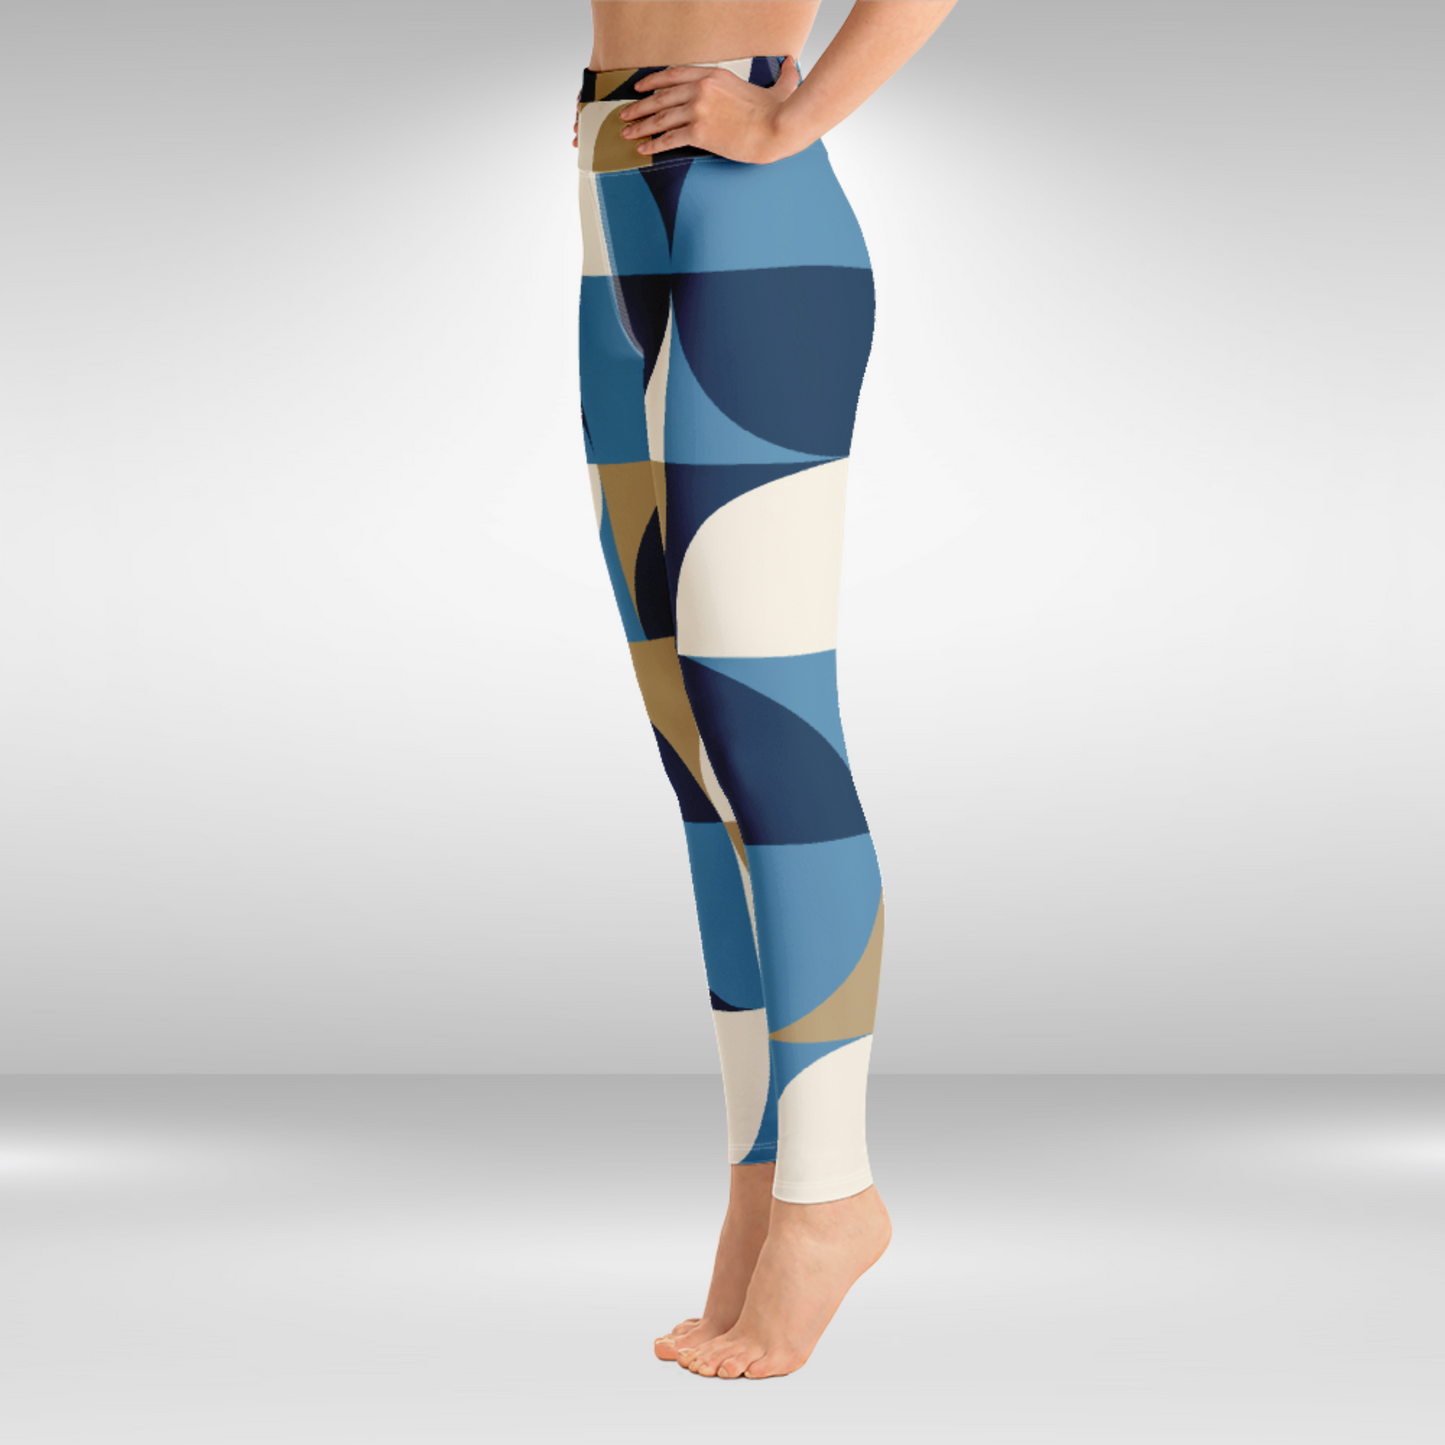 Women Yoga Legging - Blue and Khaki Abstract Print